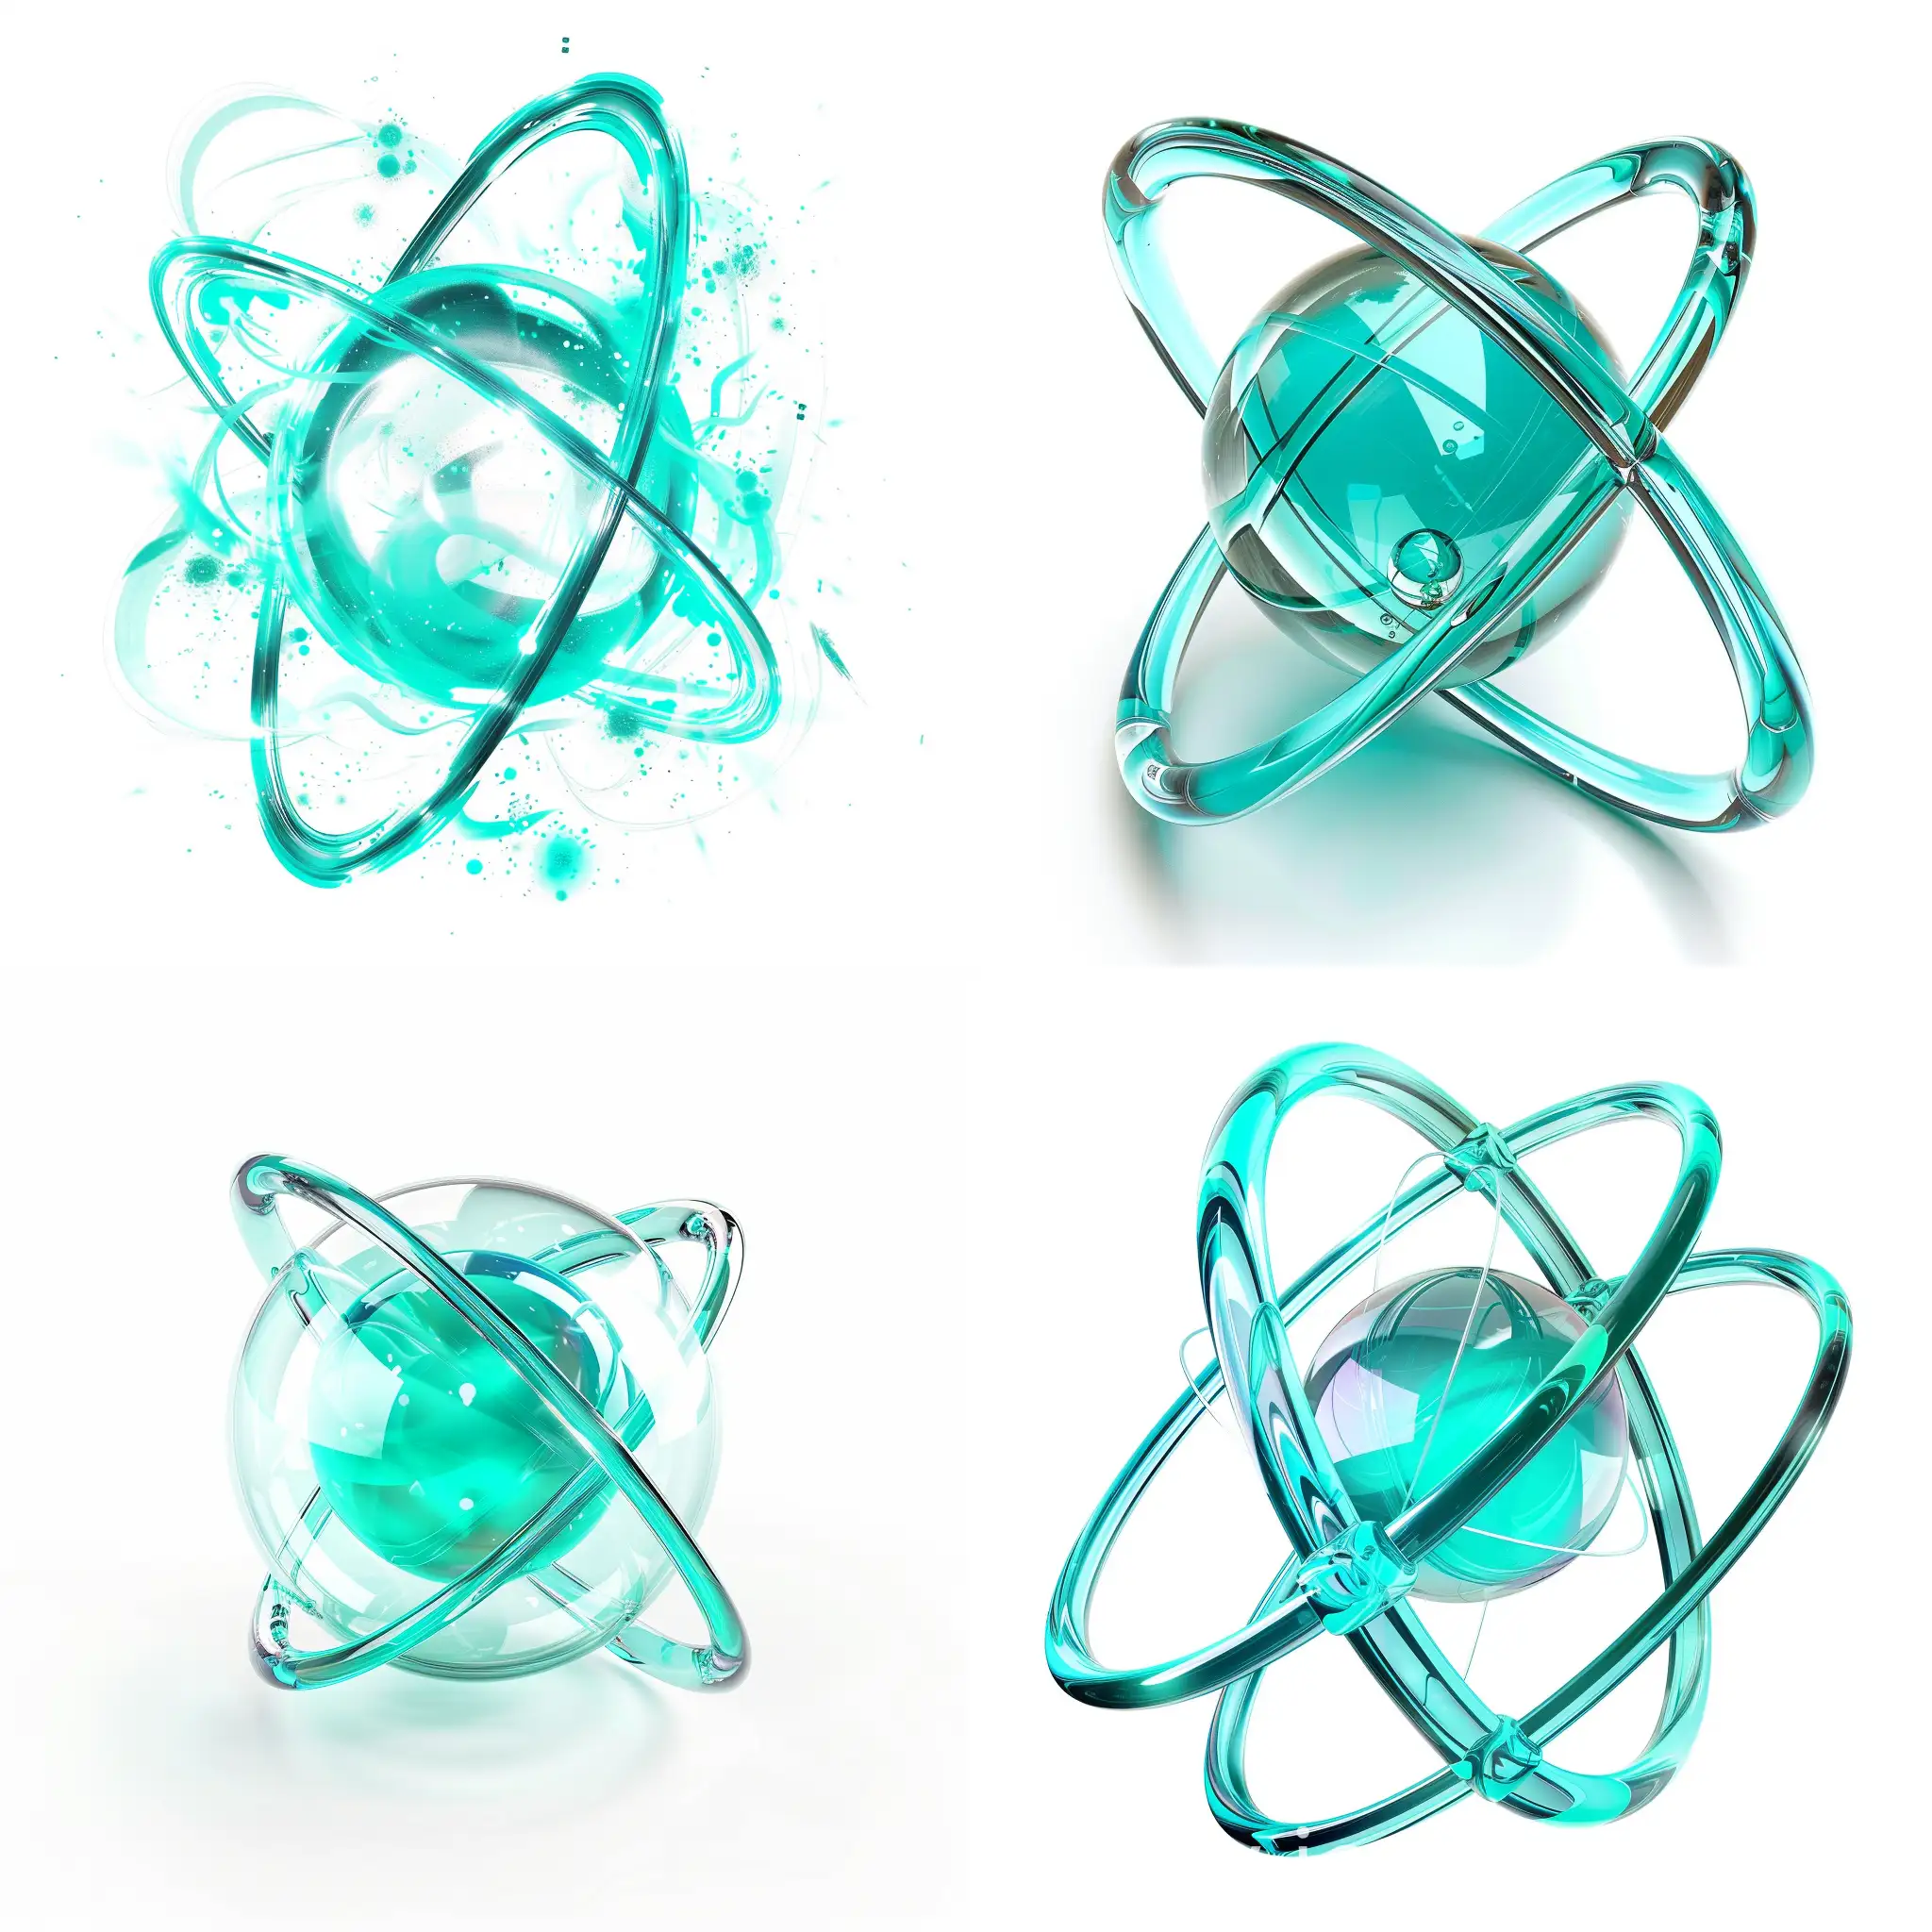 orbit atom bold glossy glass shiny illustration glow turquoise on white